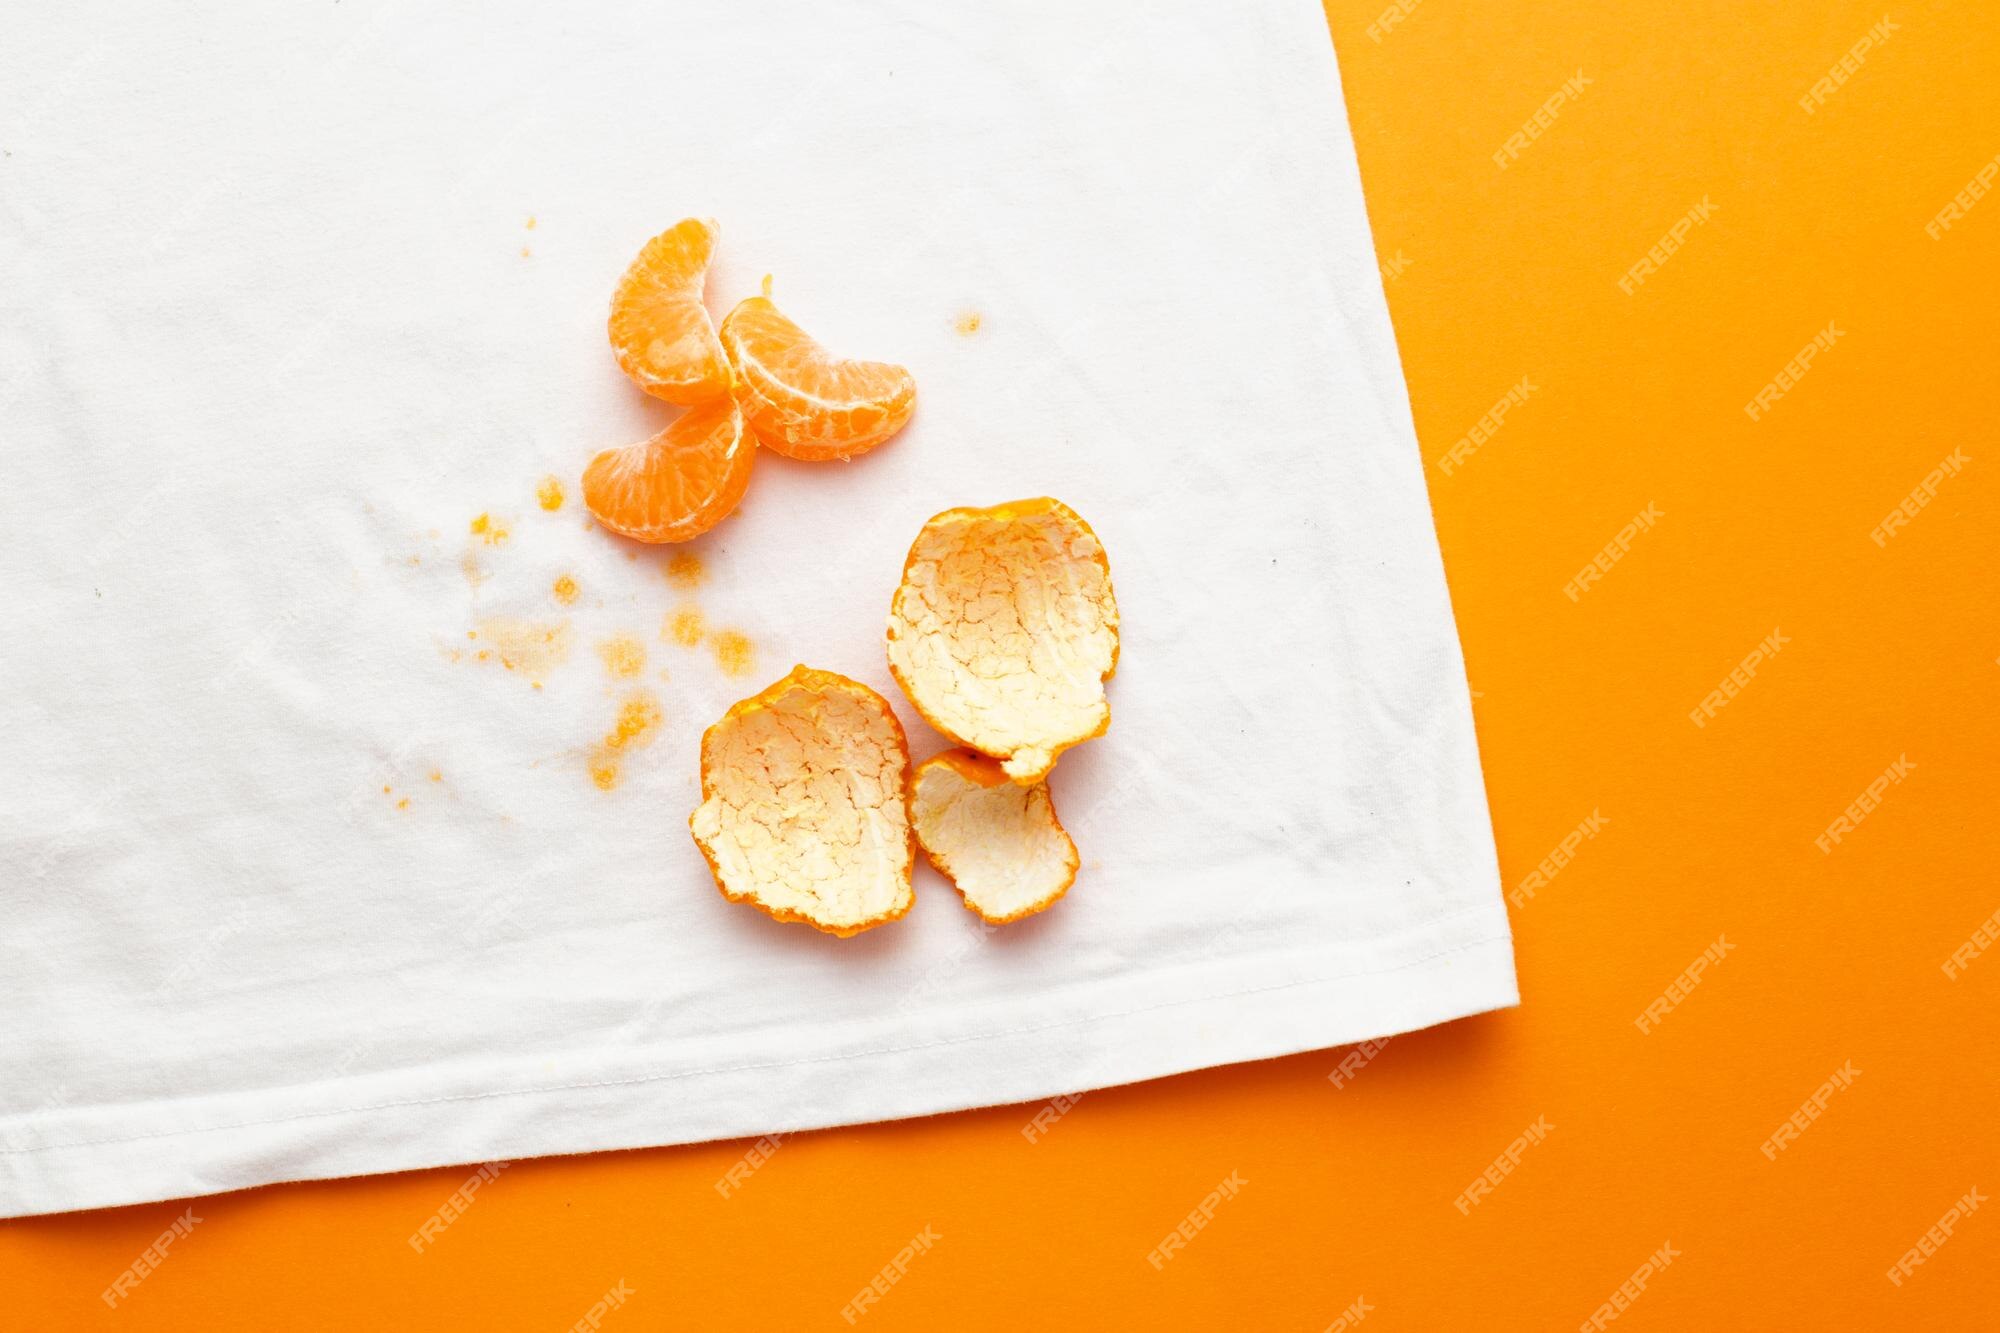 Manchas sucias en ropa blanca de frutas mandarina sobre fondo naranja |  Foto Premium